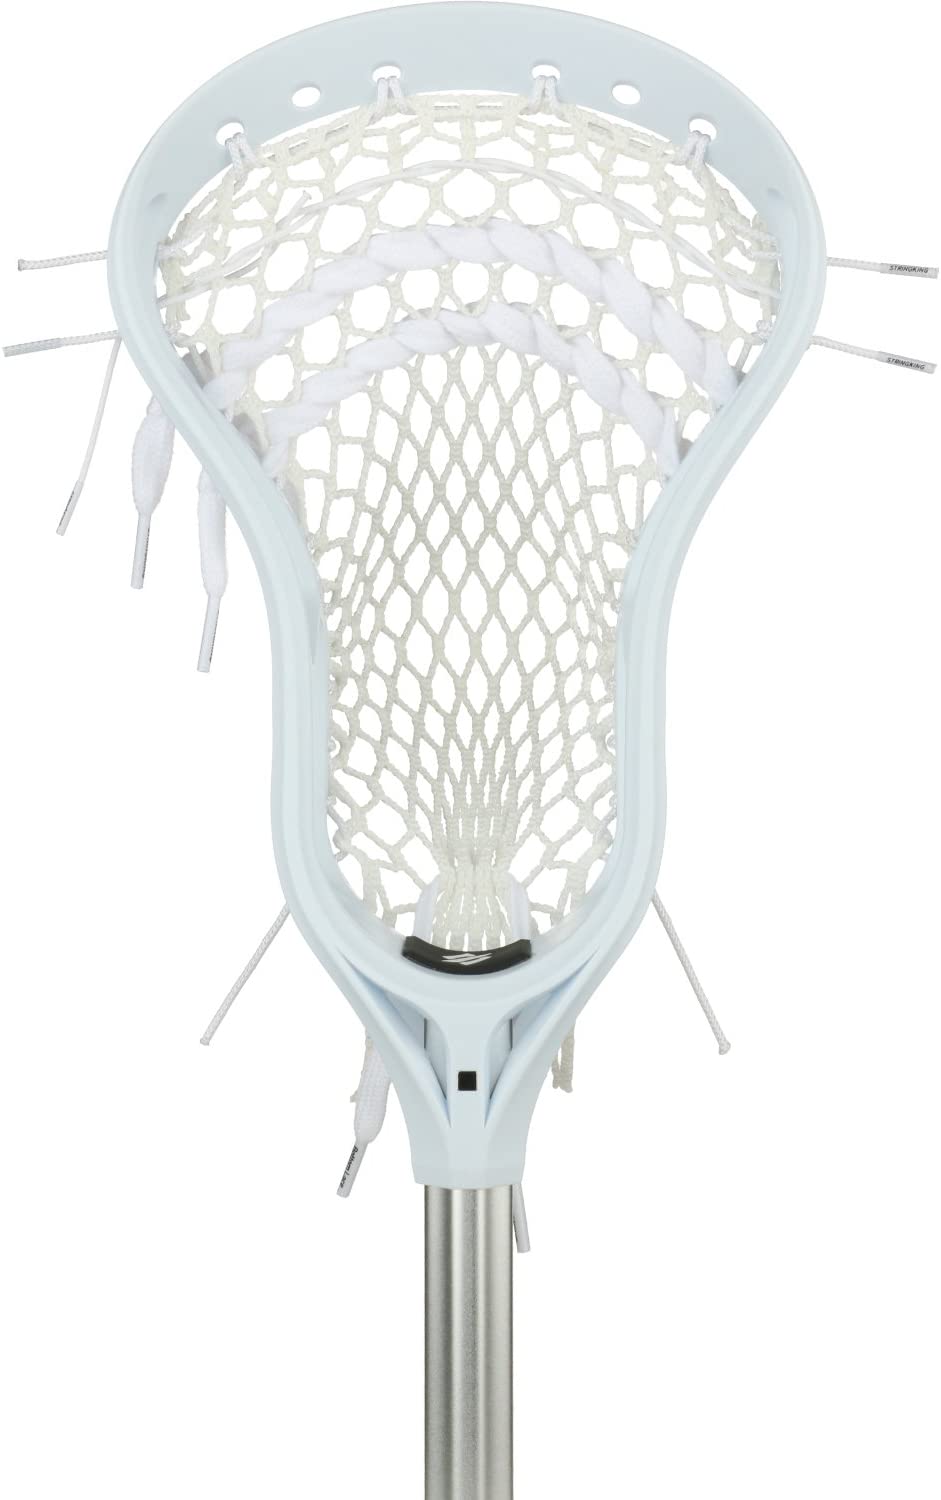 StringKing Complete 2 Alloy Men’s Lacrosse Stick